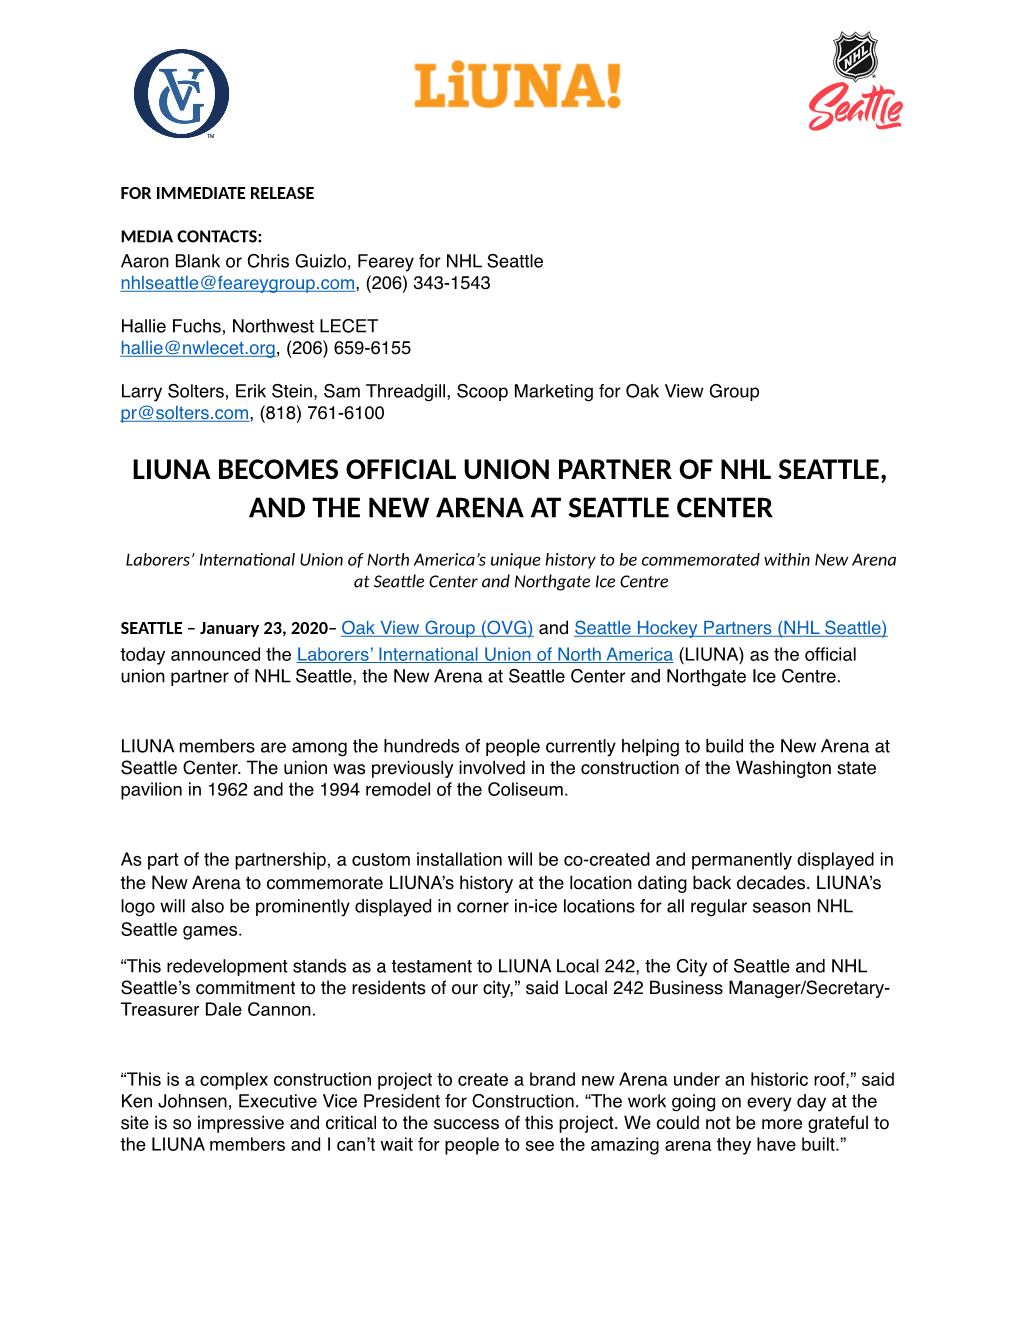 Download NHL Seattle LIUNA Press Release.Pdf